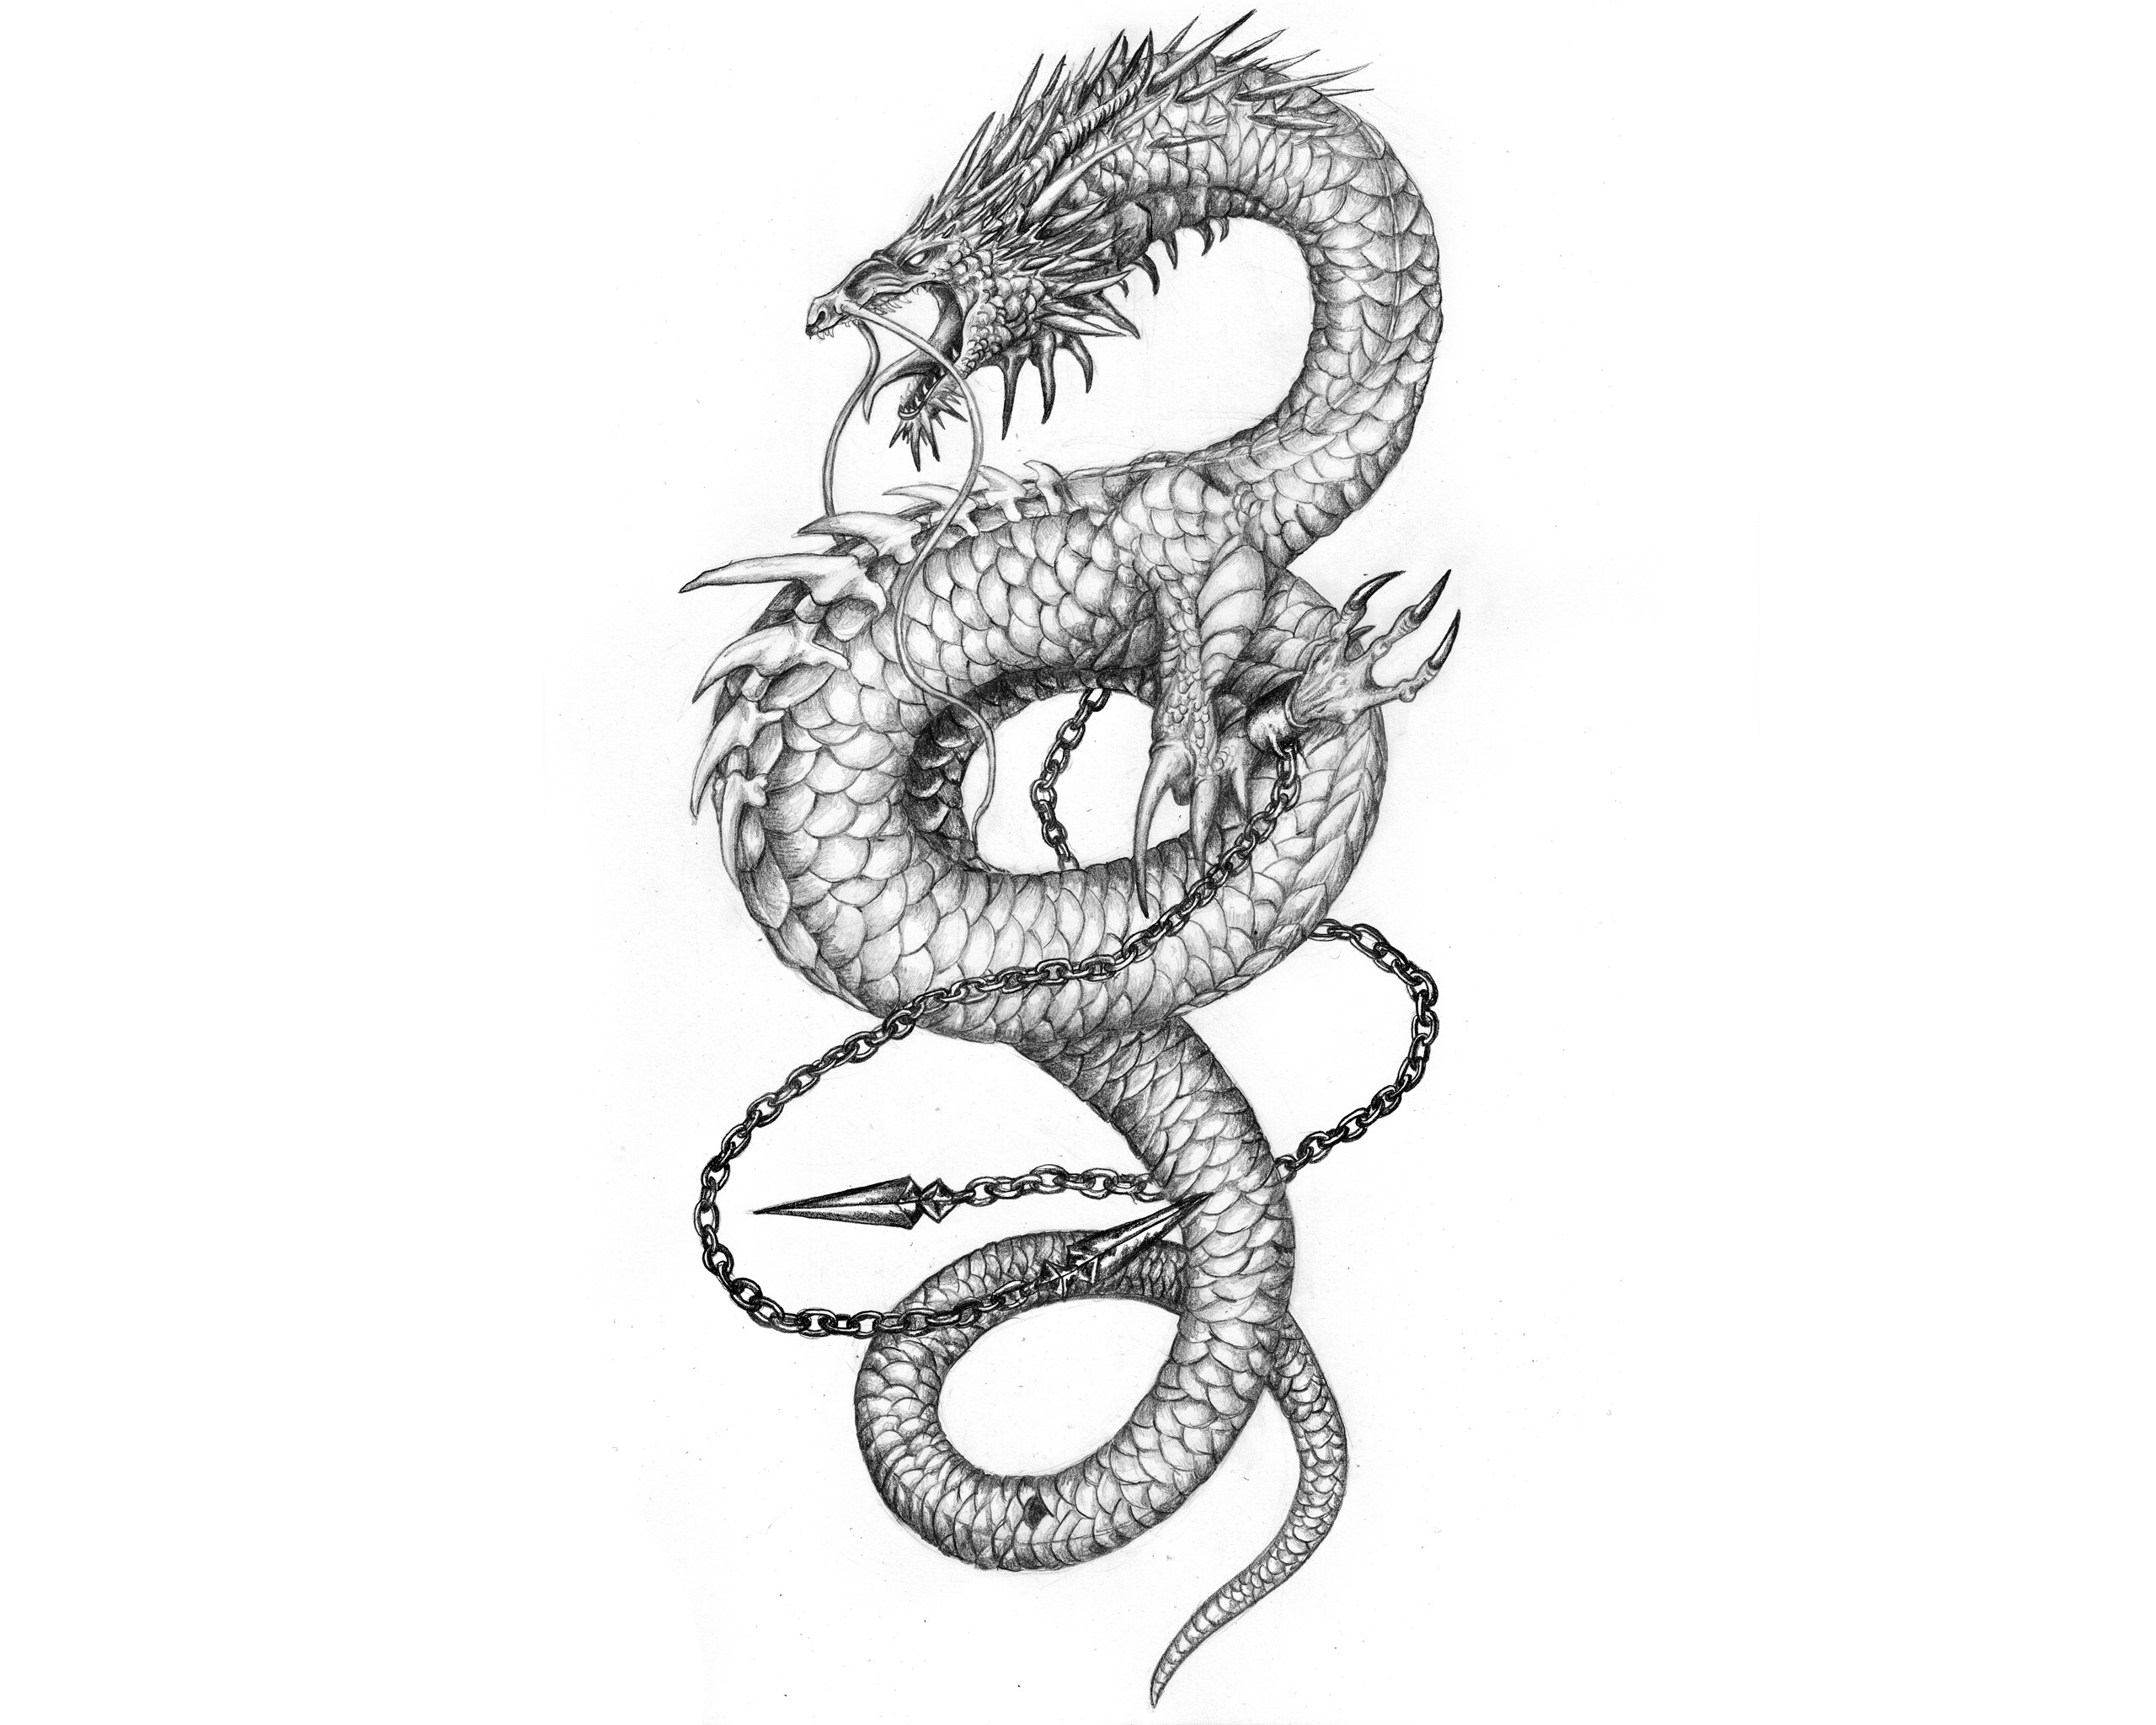 Dragon Wrist Tattoo Meaning - wide 11